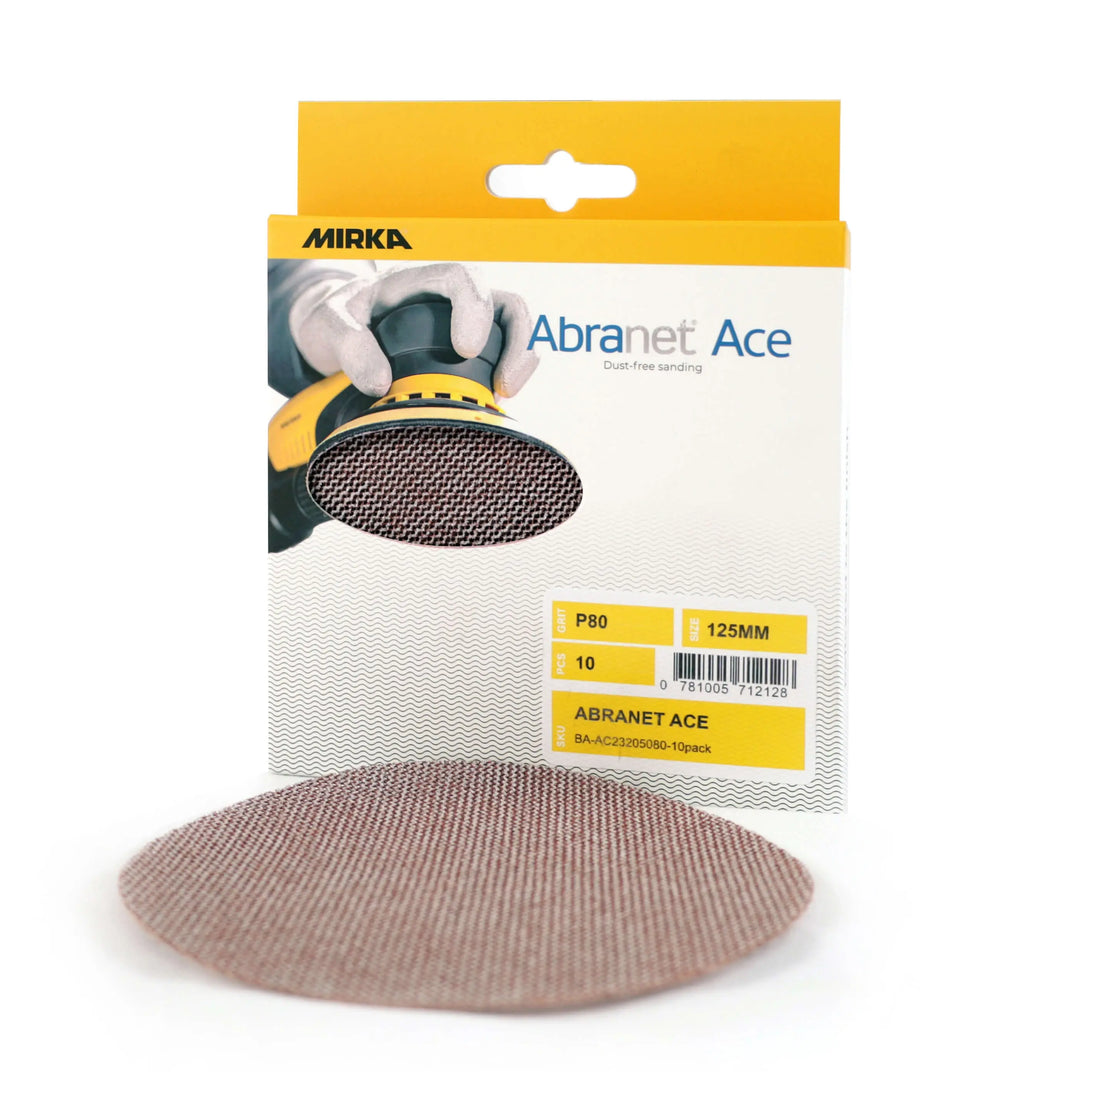 Mirka Abranet Ace Ceramic Sanding Discs 125mm - 10 Pack Abranet Ace